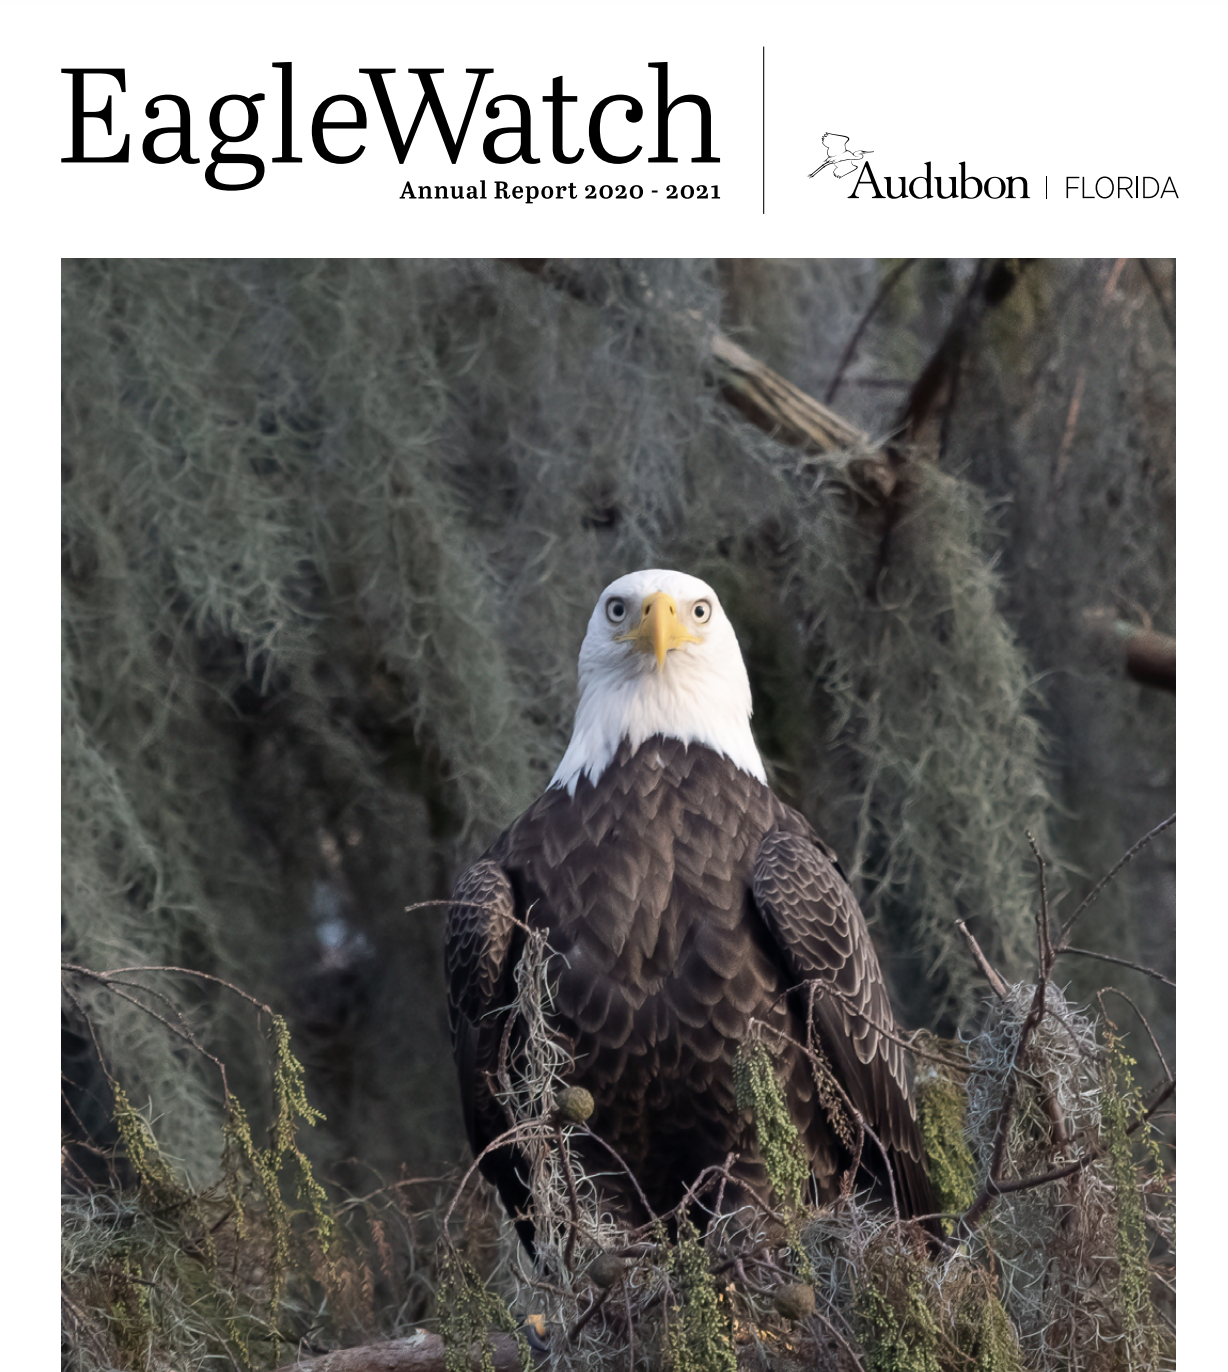 Adult Bald Eagle sits amidst waving Spanish moss. Photo: Valerie Clayton.